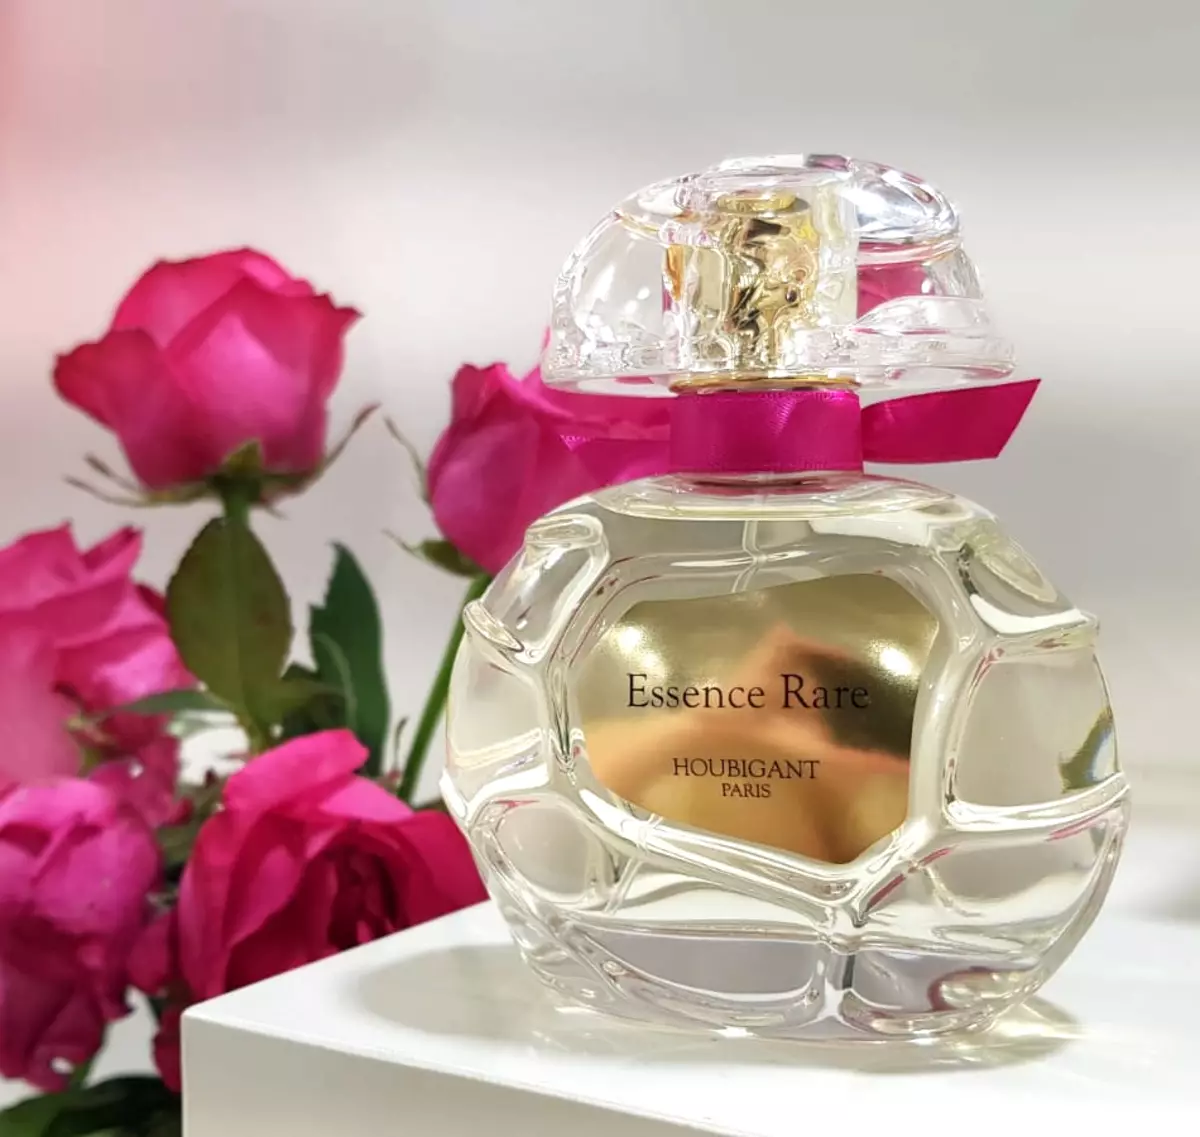 Houbigant parfym: Quelques Fleurs Royale och Essence Rare, Oangers en Fleurs och Iris des Champs, Fougere Royale och Köln Intense, Apercu och andra smaker 25165_3